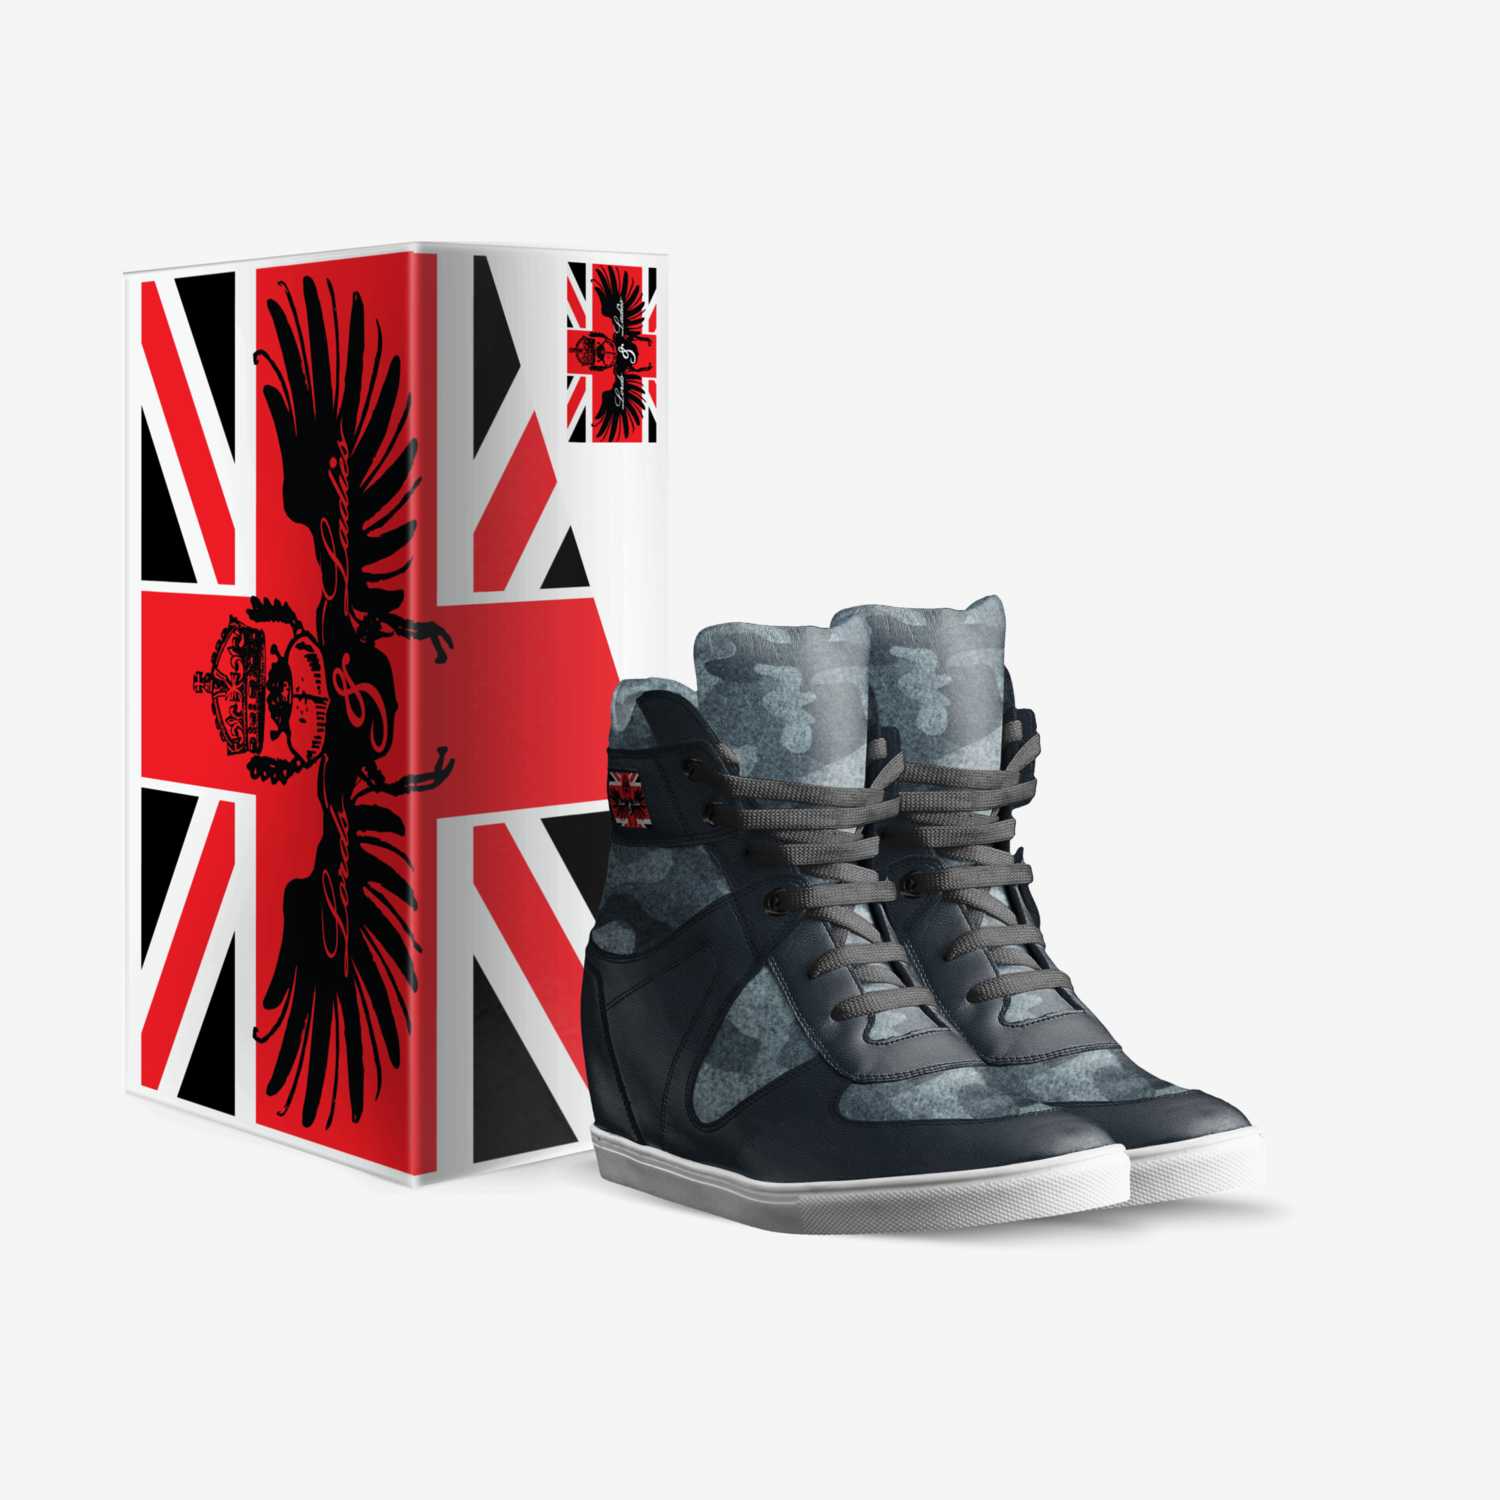 Regina custom made in Italy shoes by David Wall | Box view